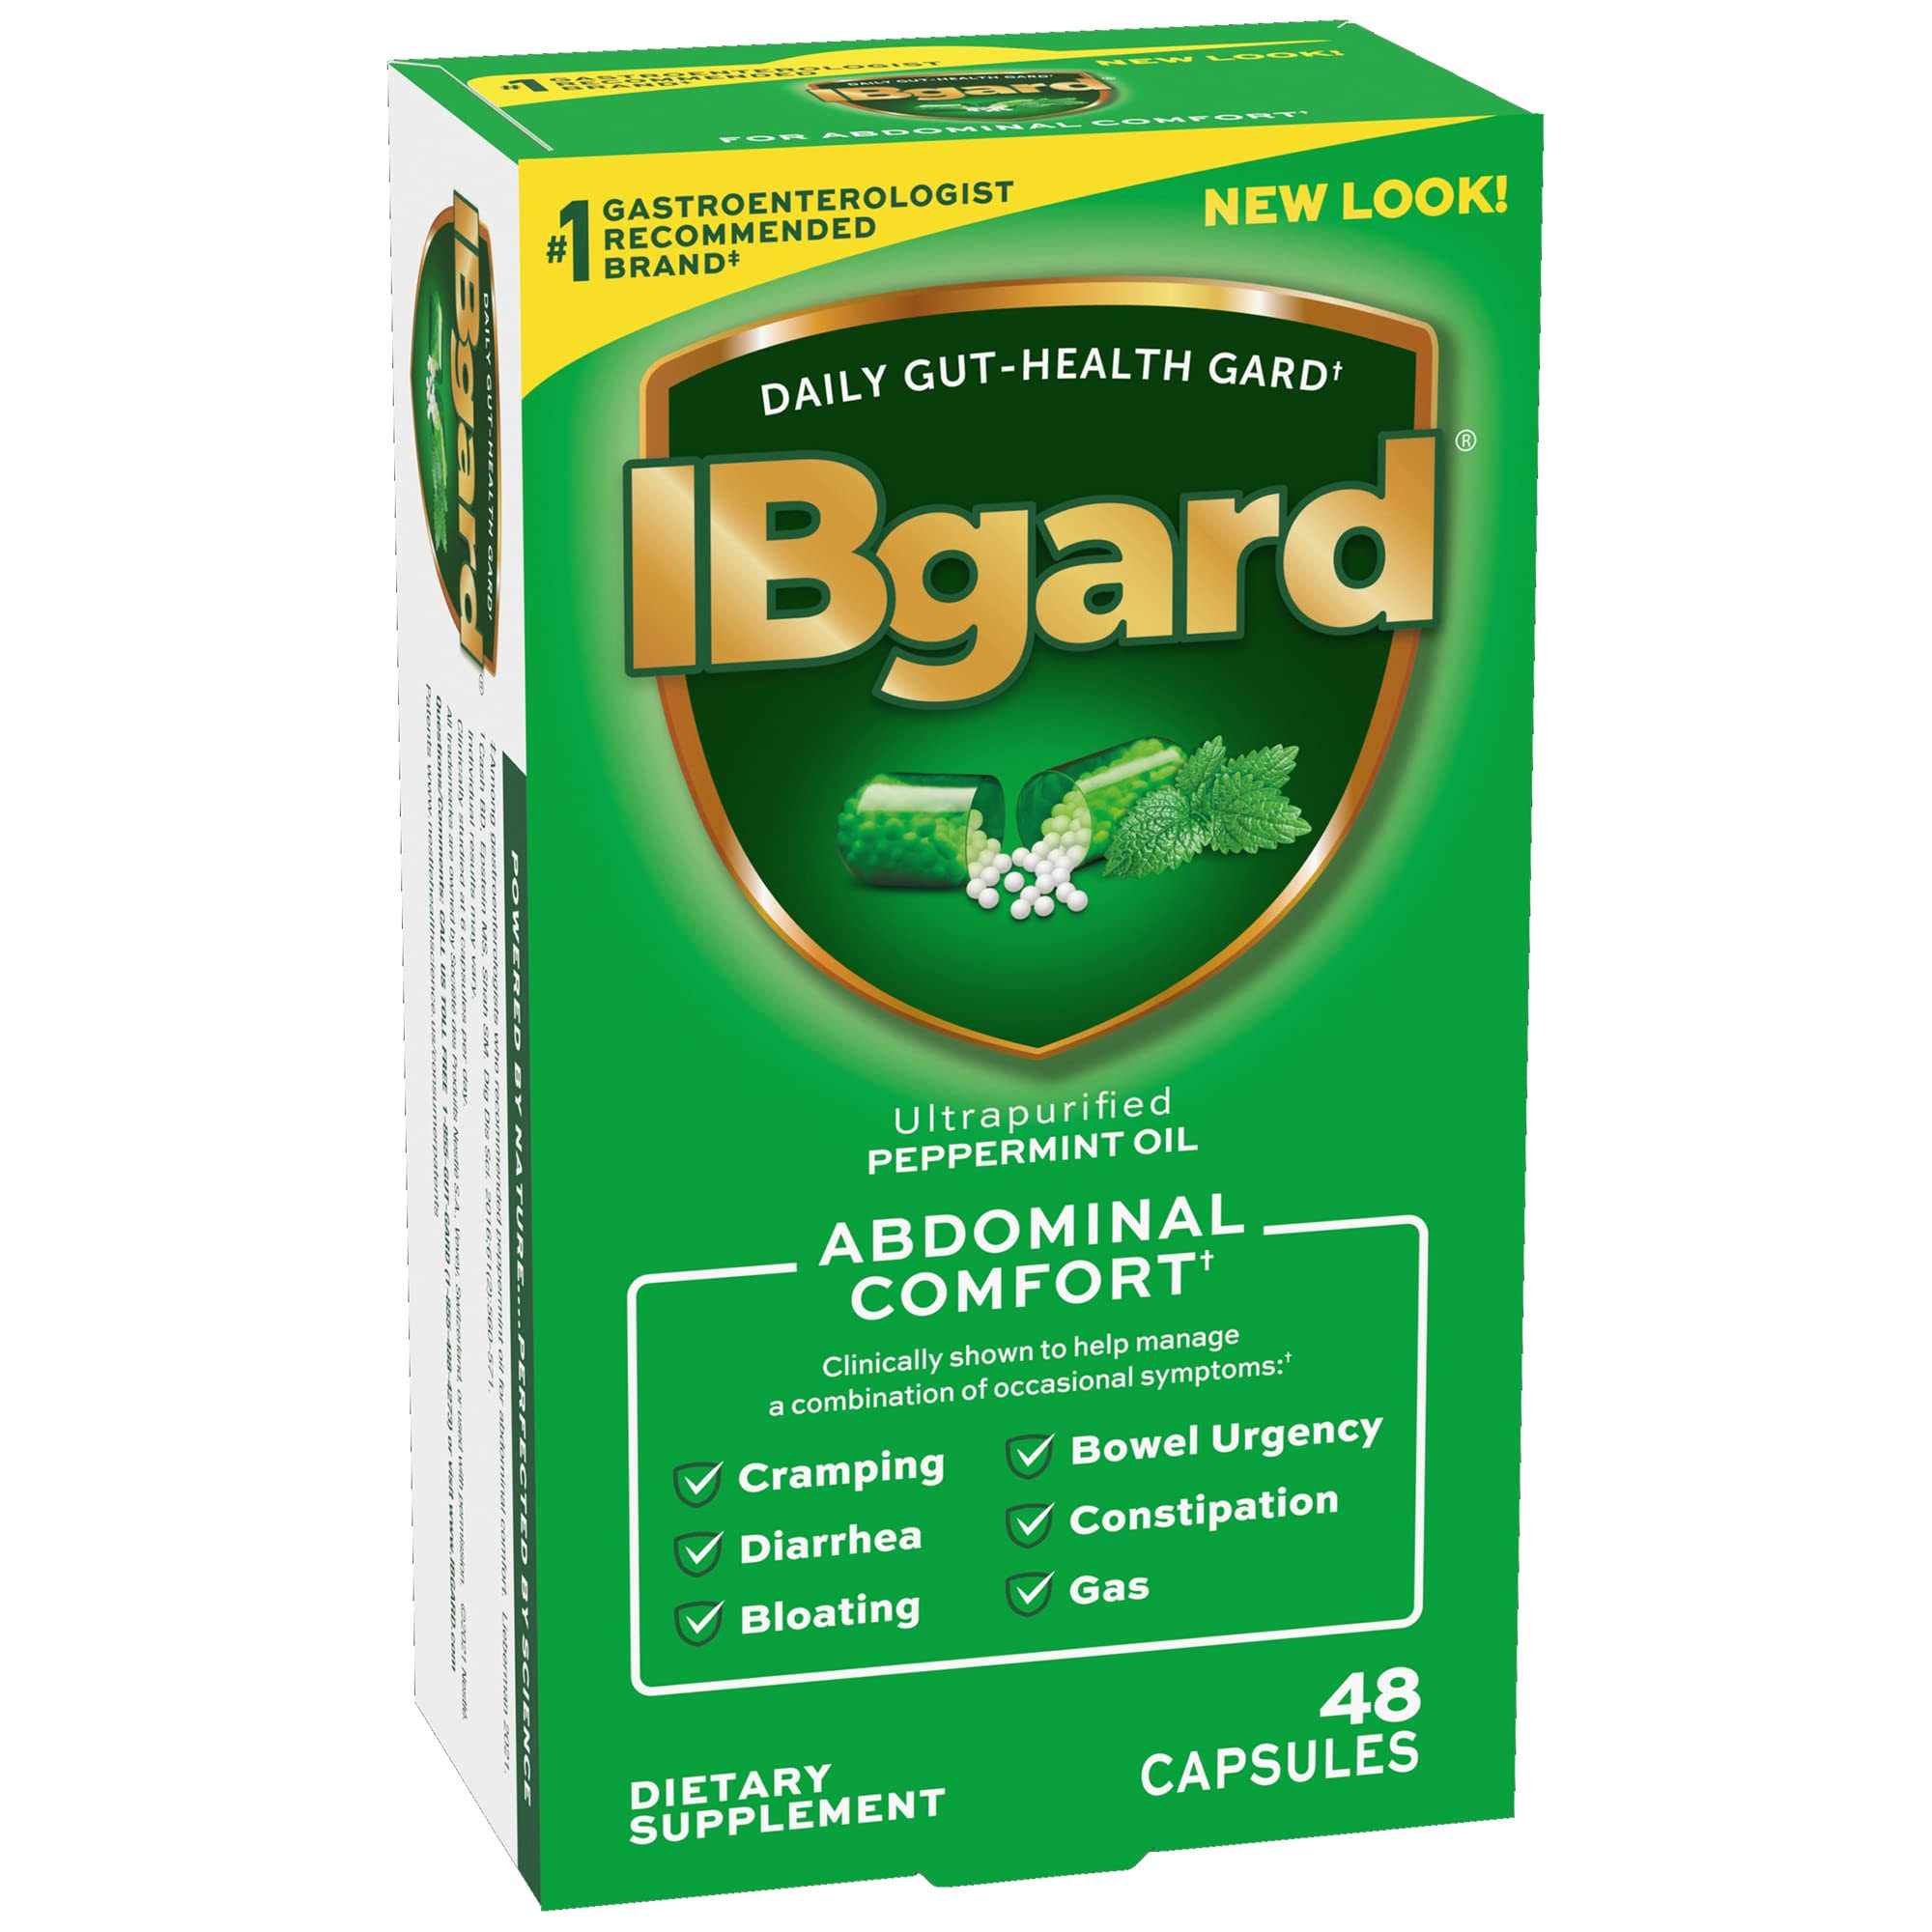 IBgard Irritable Bowel Syndrome Capsules - 48 Count